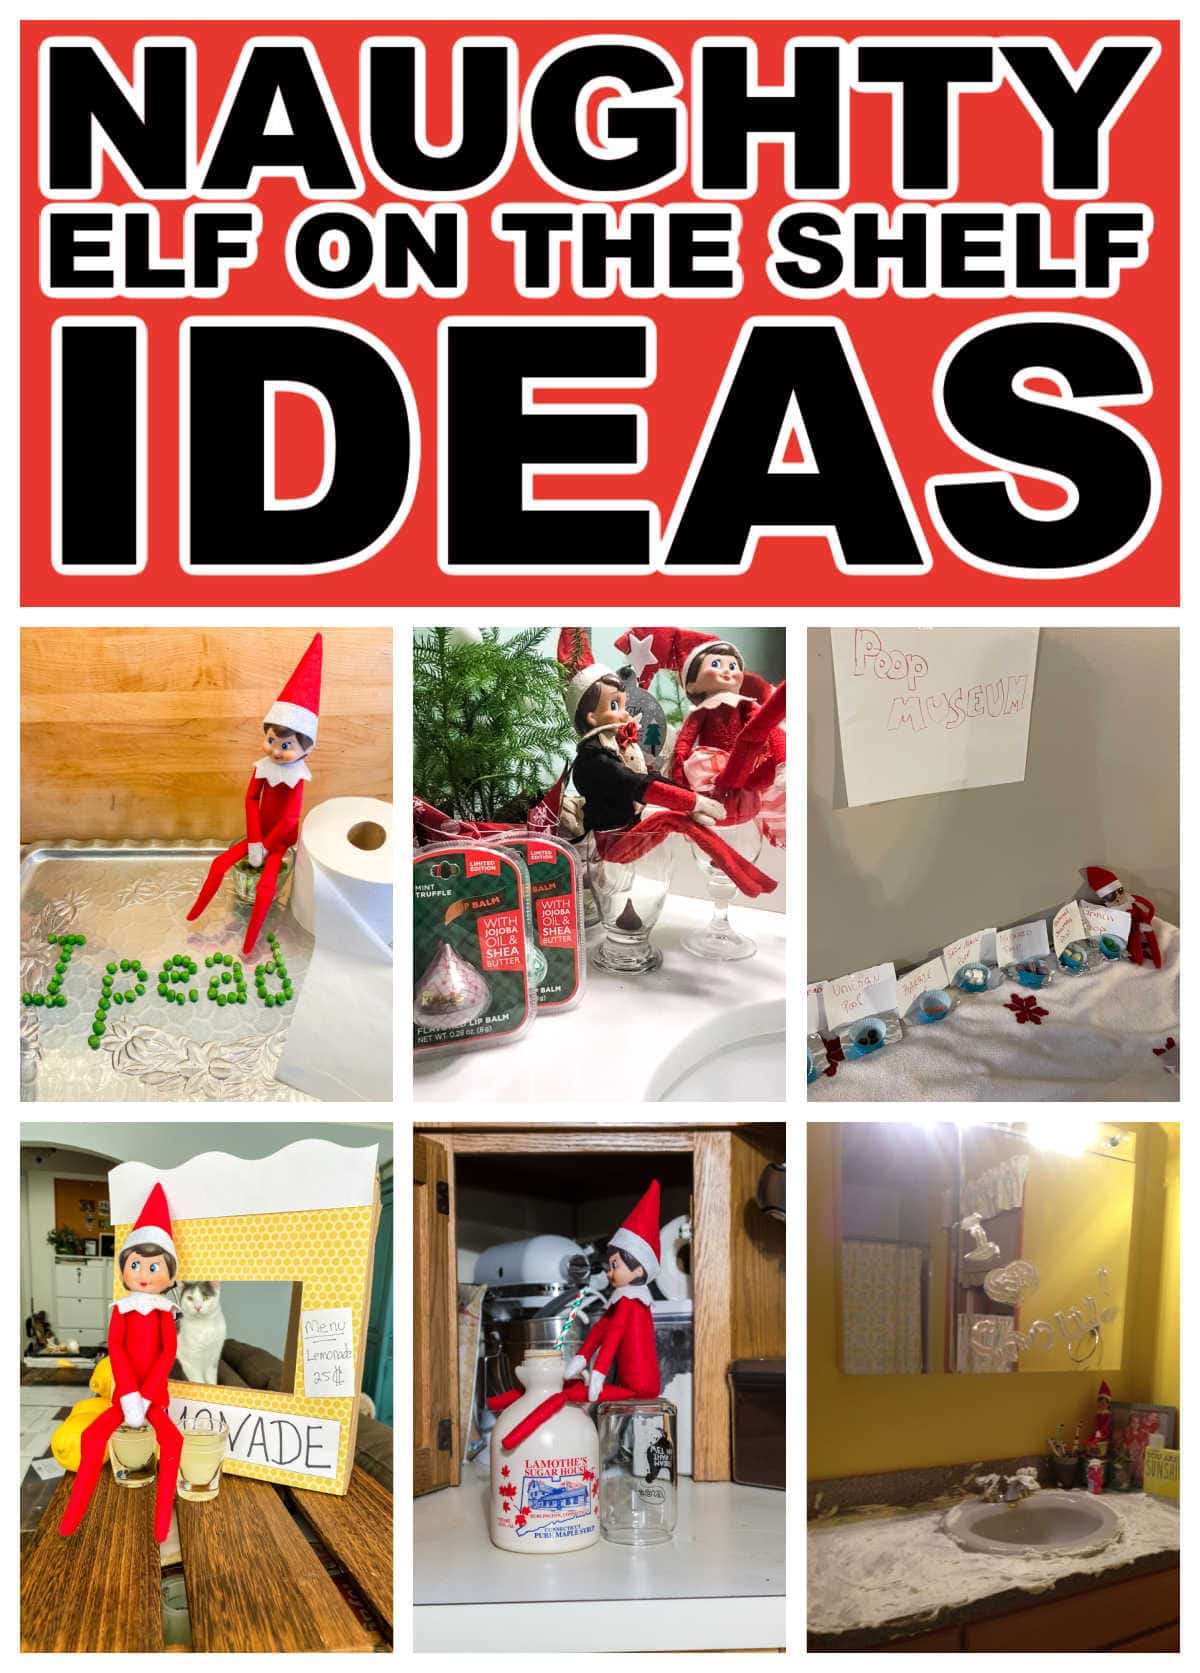 Naughty elf on the shelf ideas.